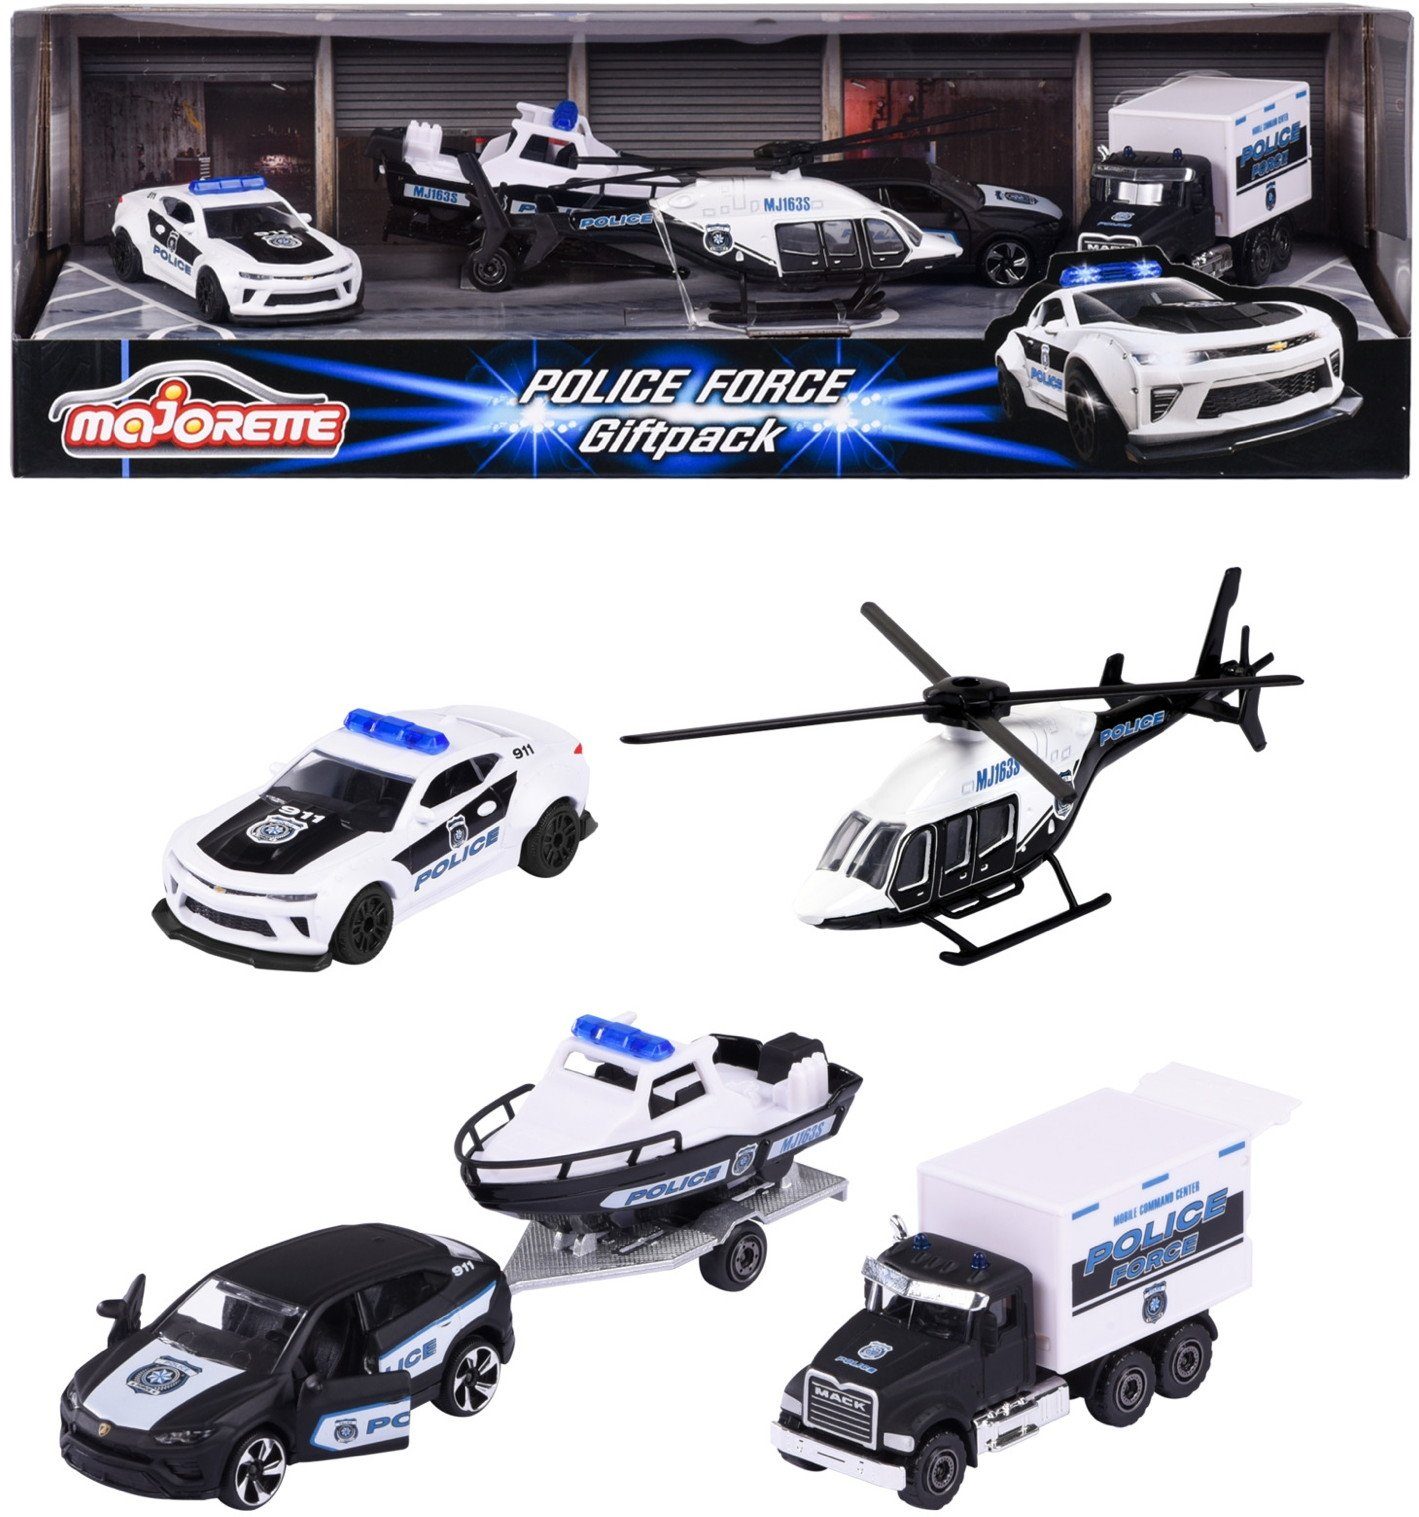 Police Spielzeug-Polizei 4er Force 212053188 majORETTE Giftpack Spielzeugauto Pack Polizei